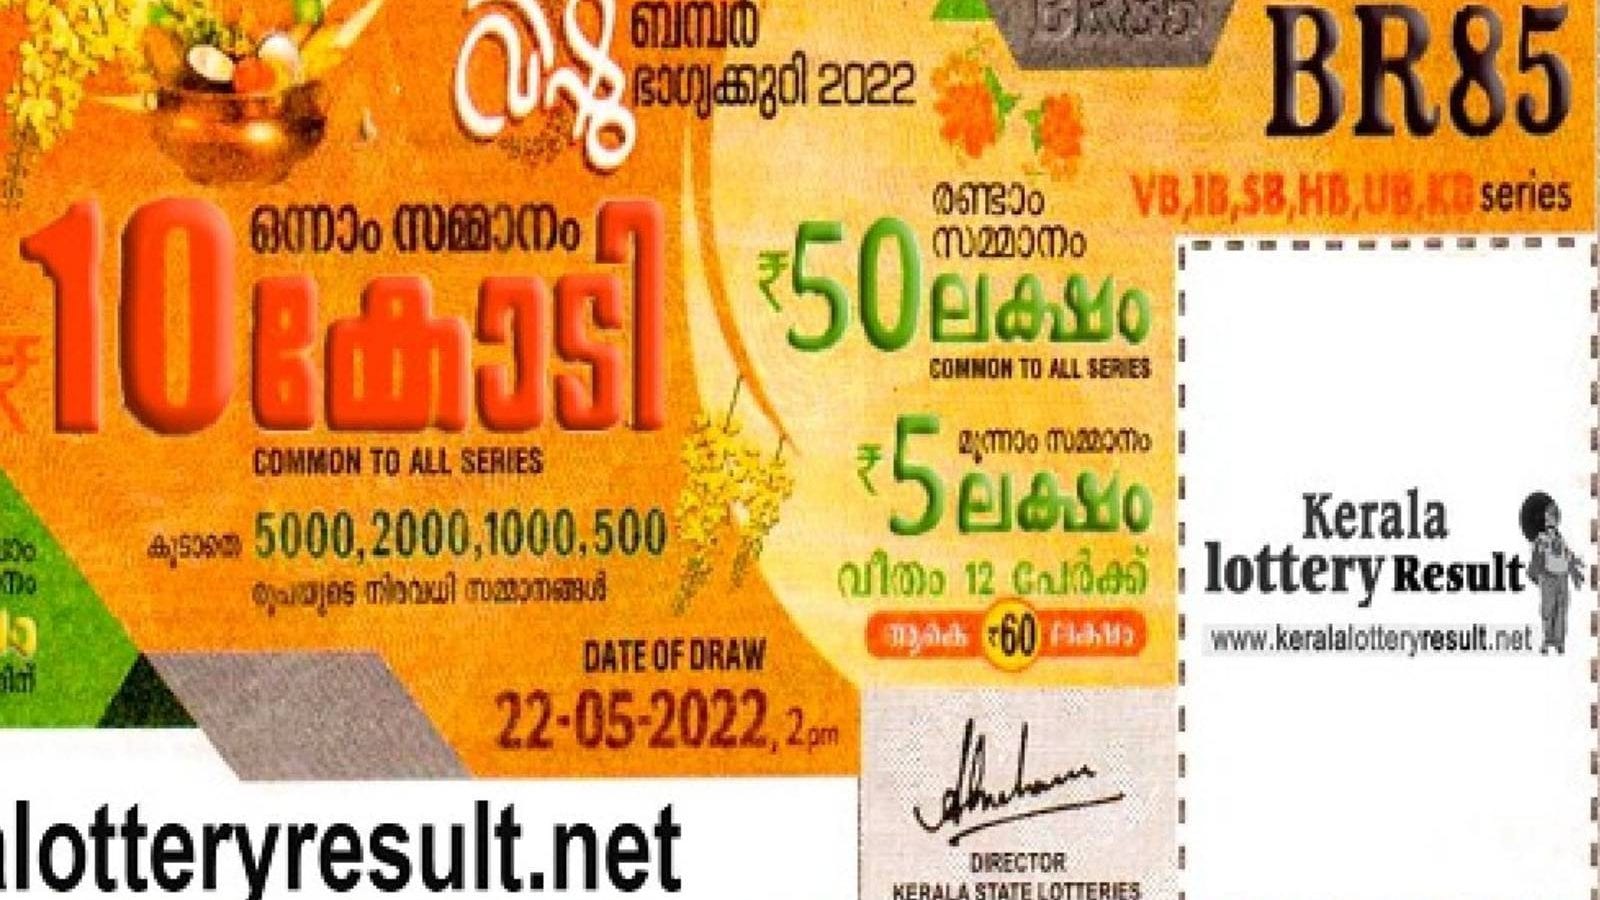 Kerala Lottery Vishu Bumper വിഷു ബംപർ പത്തുകോടി സമ്മാനം ലഭിച്ച